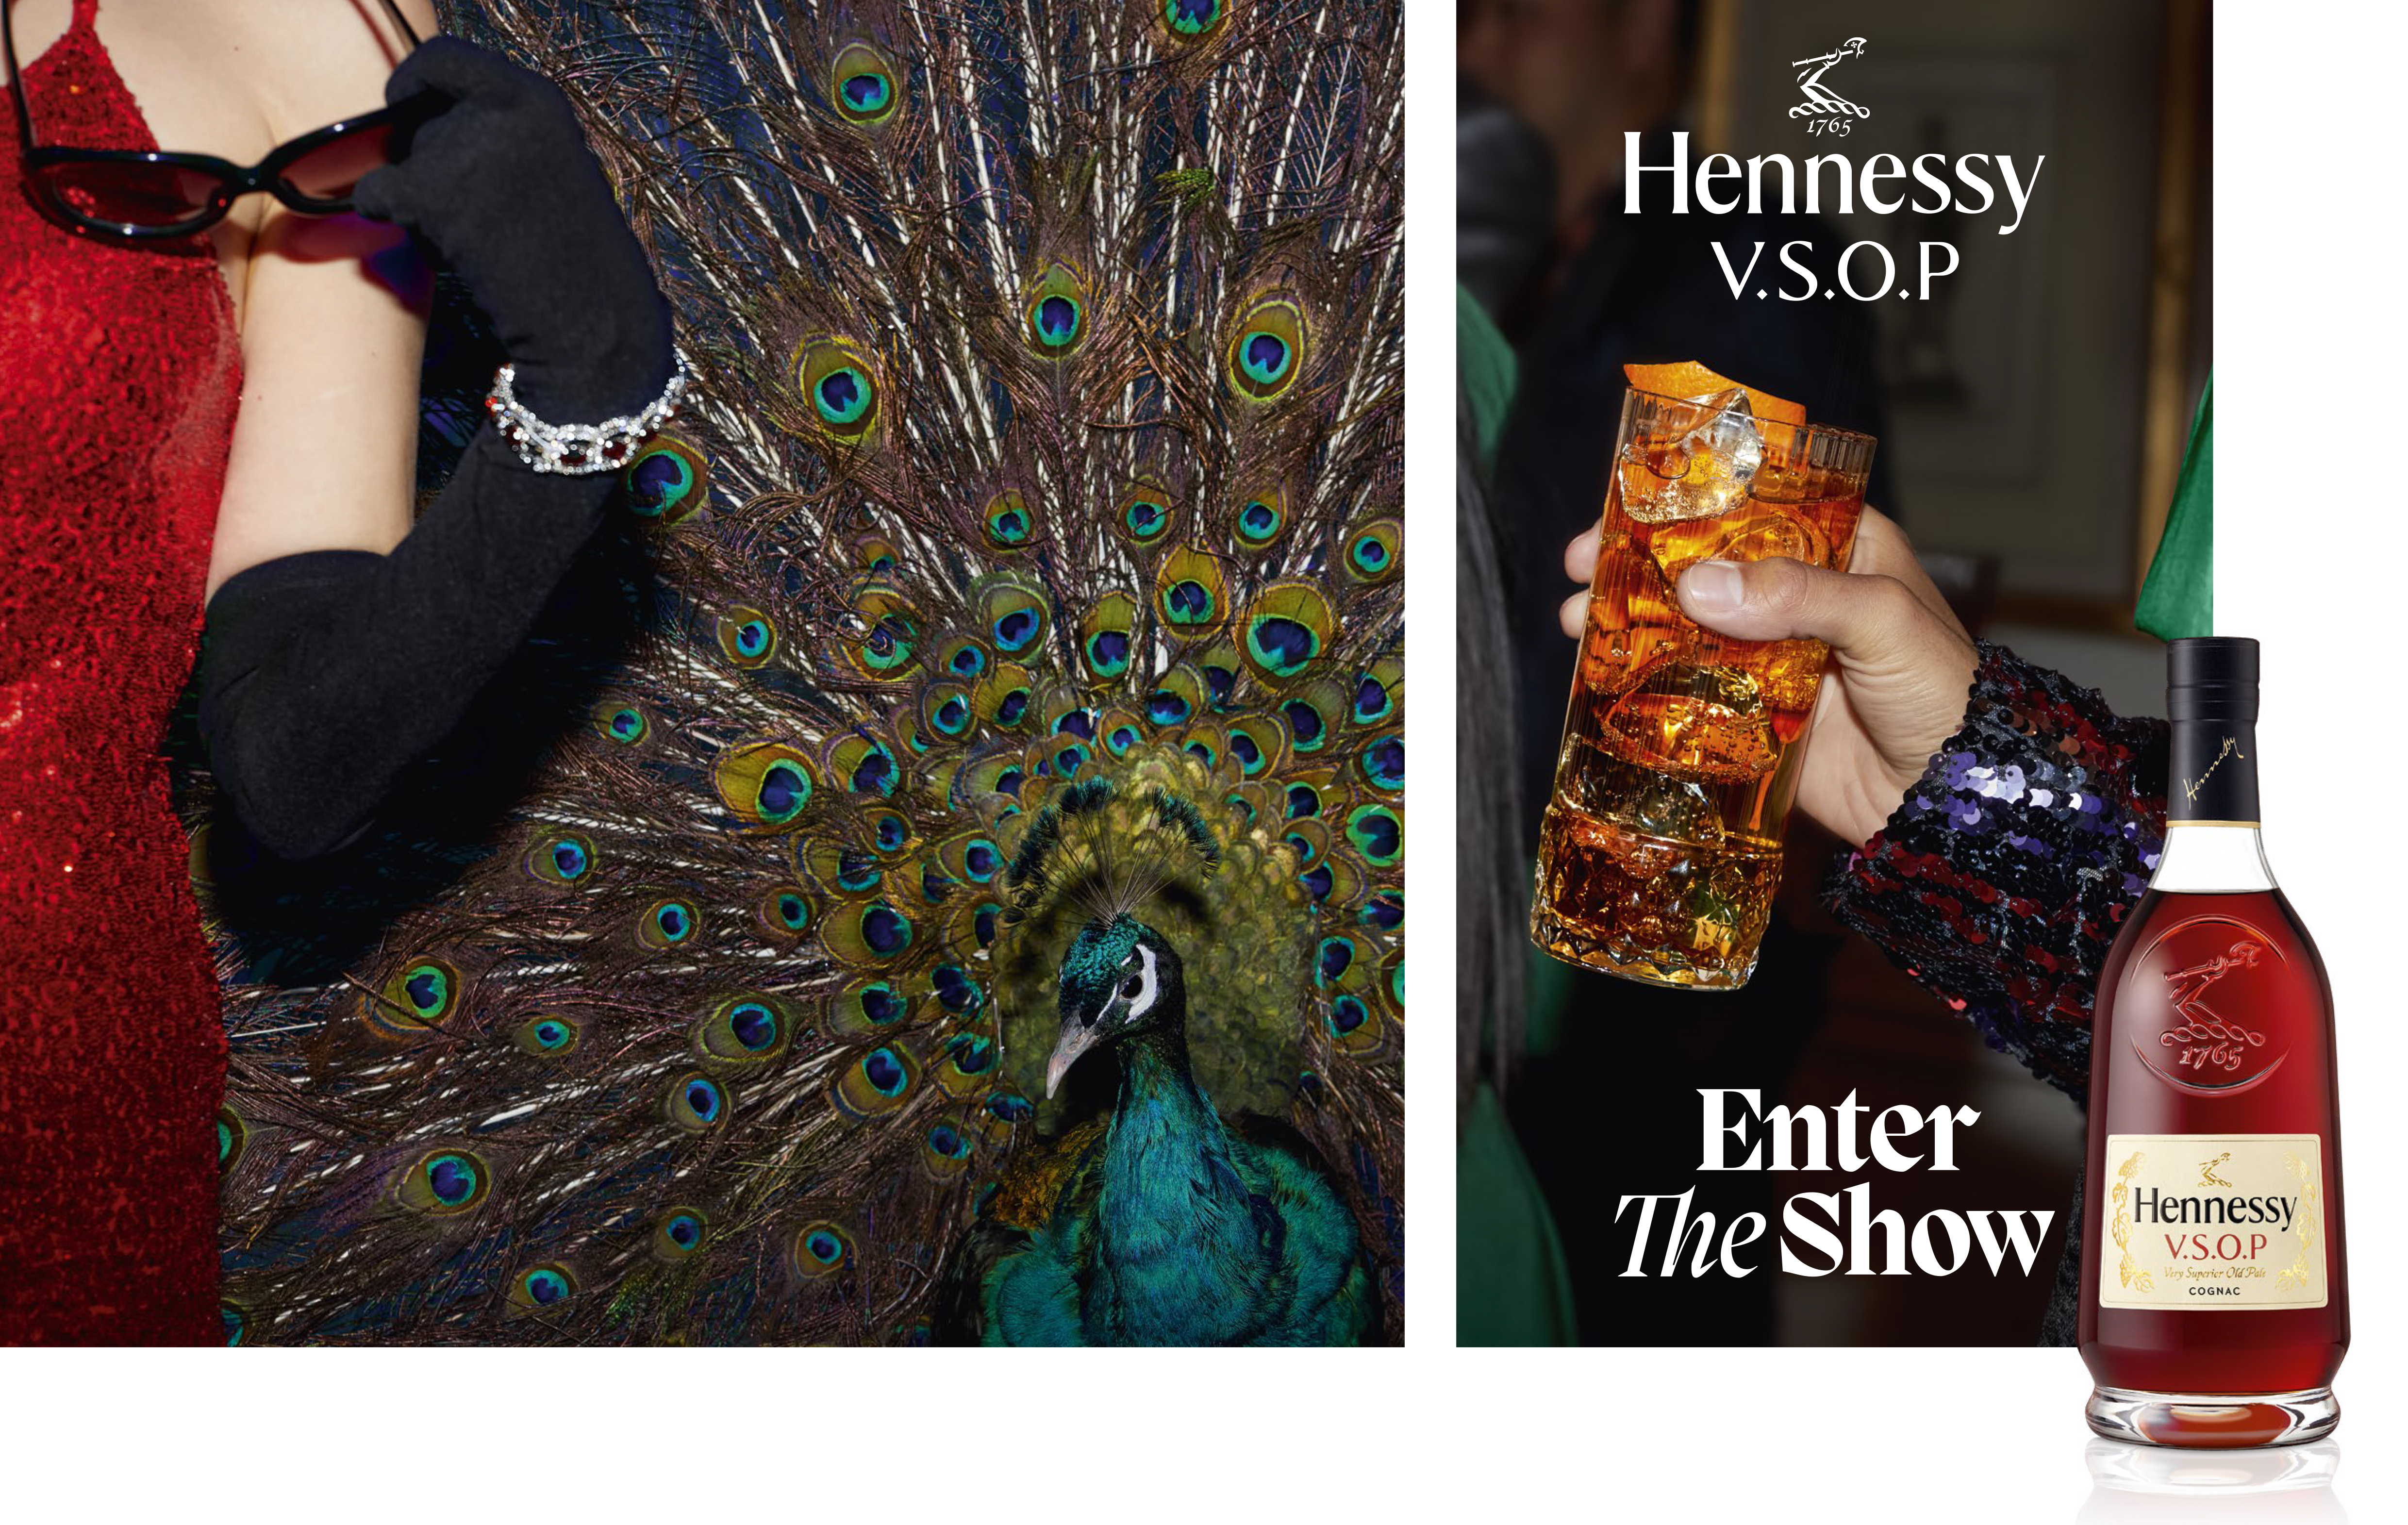 Moët Hennessy's new Paris site: building an innovative, enjoyable